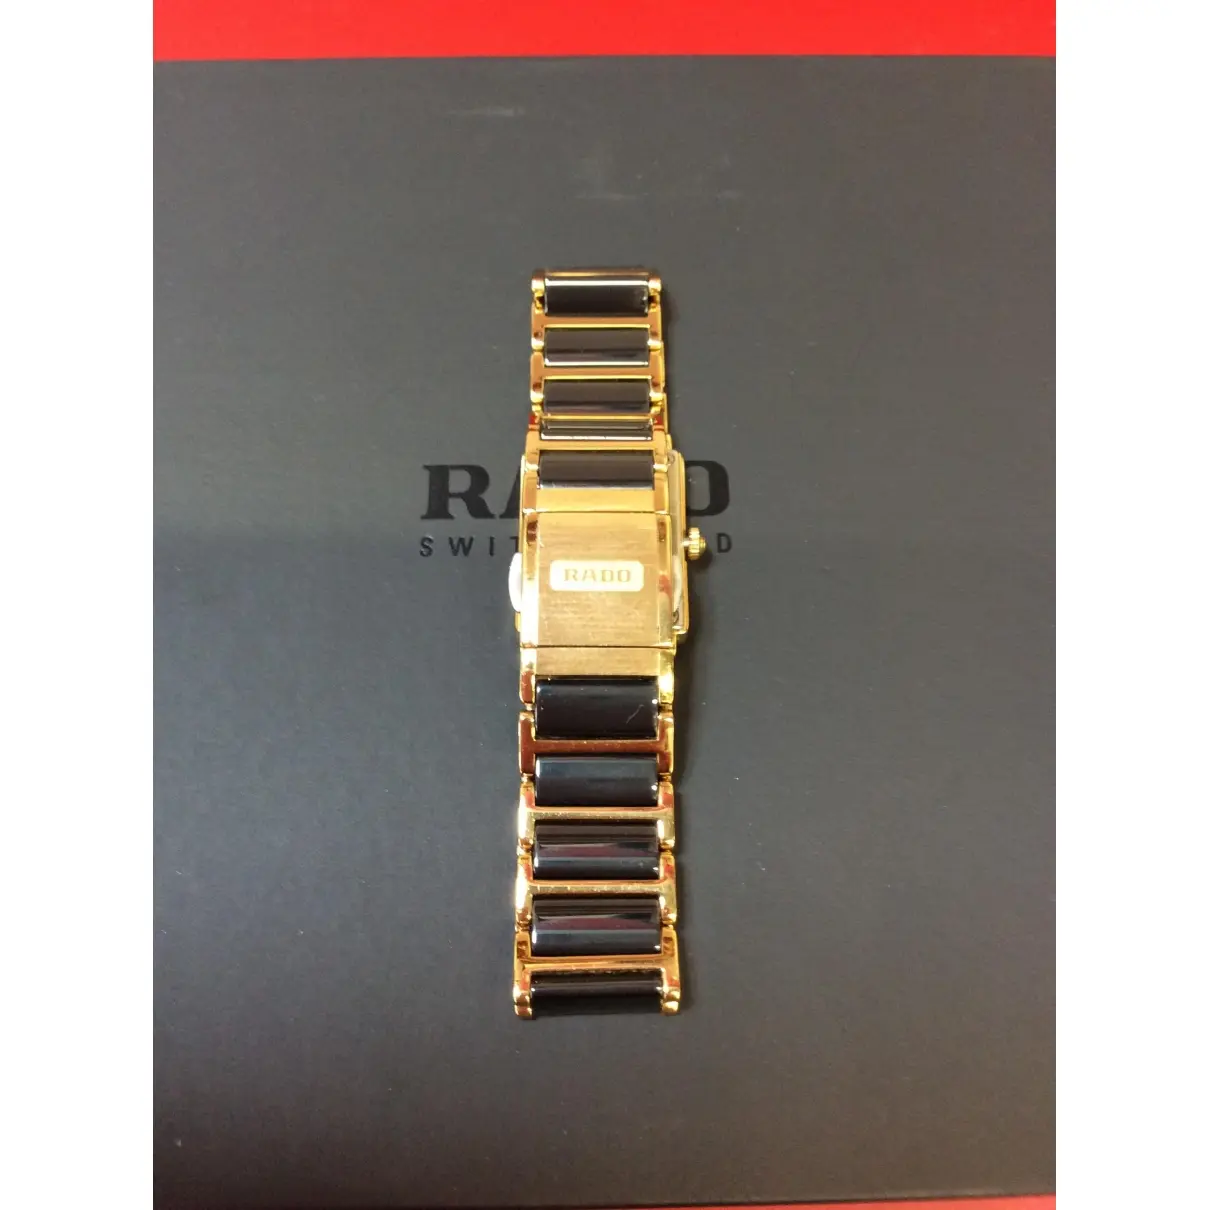 Buy RADO Ceramic watch online